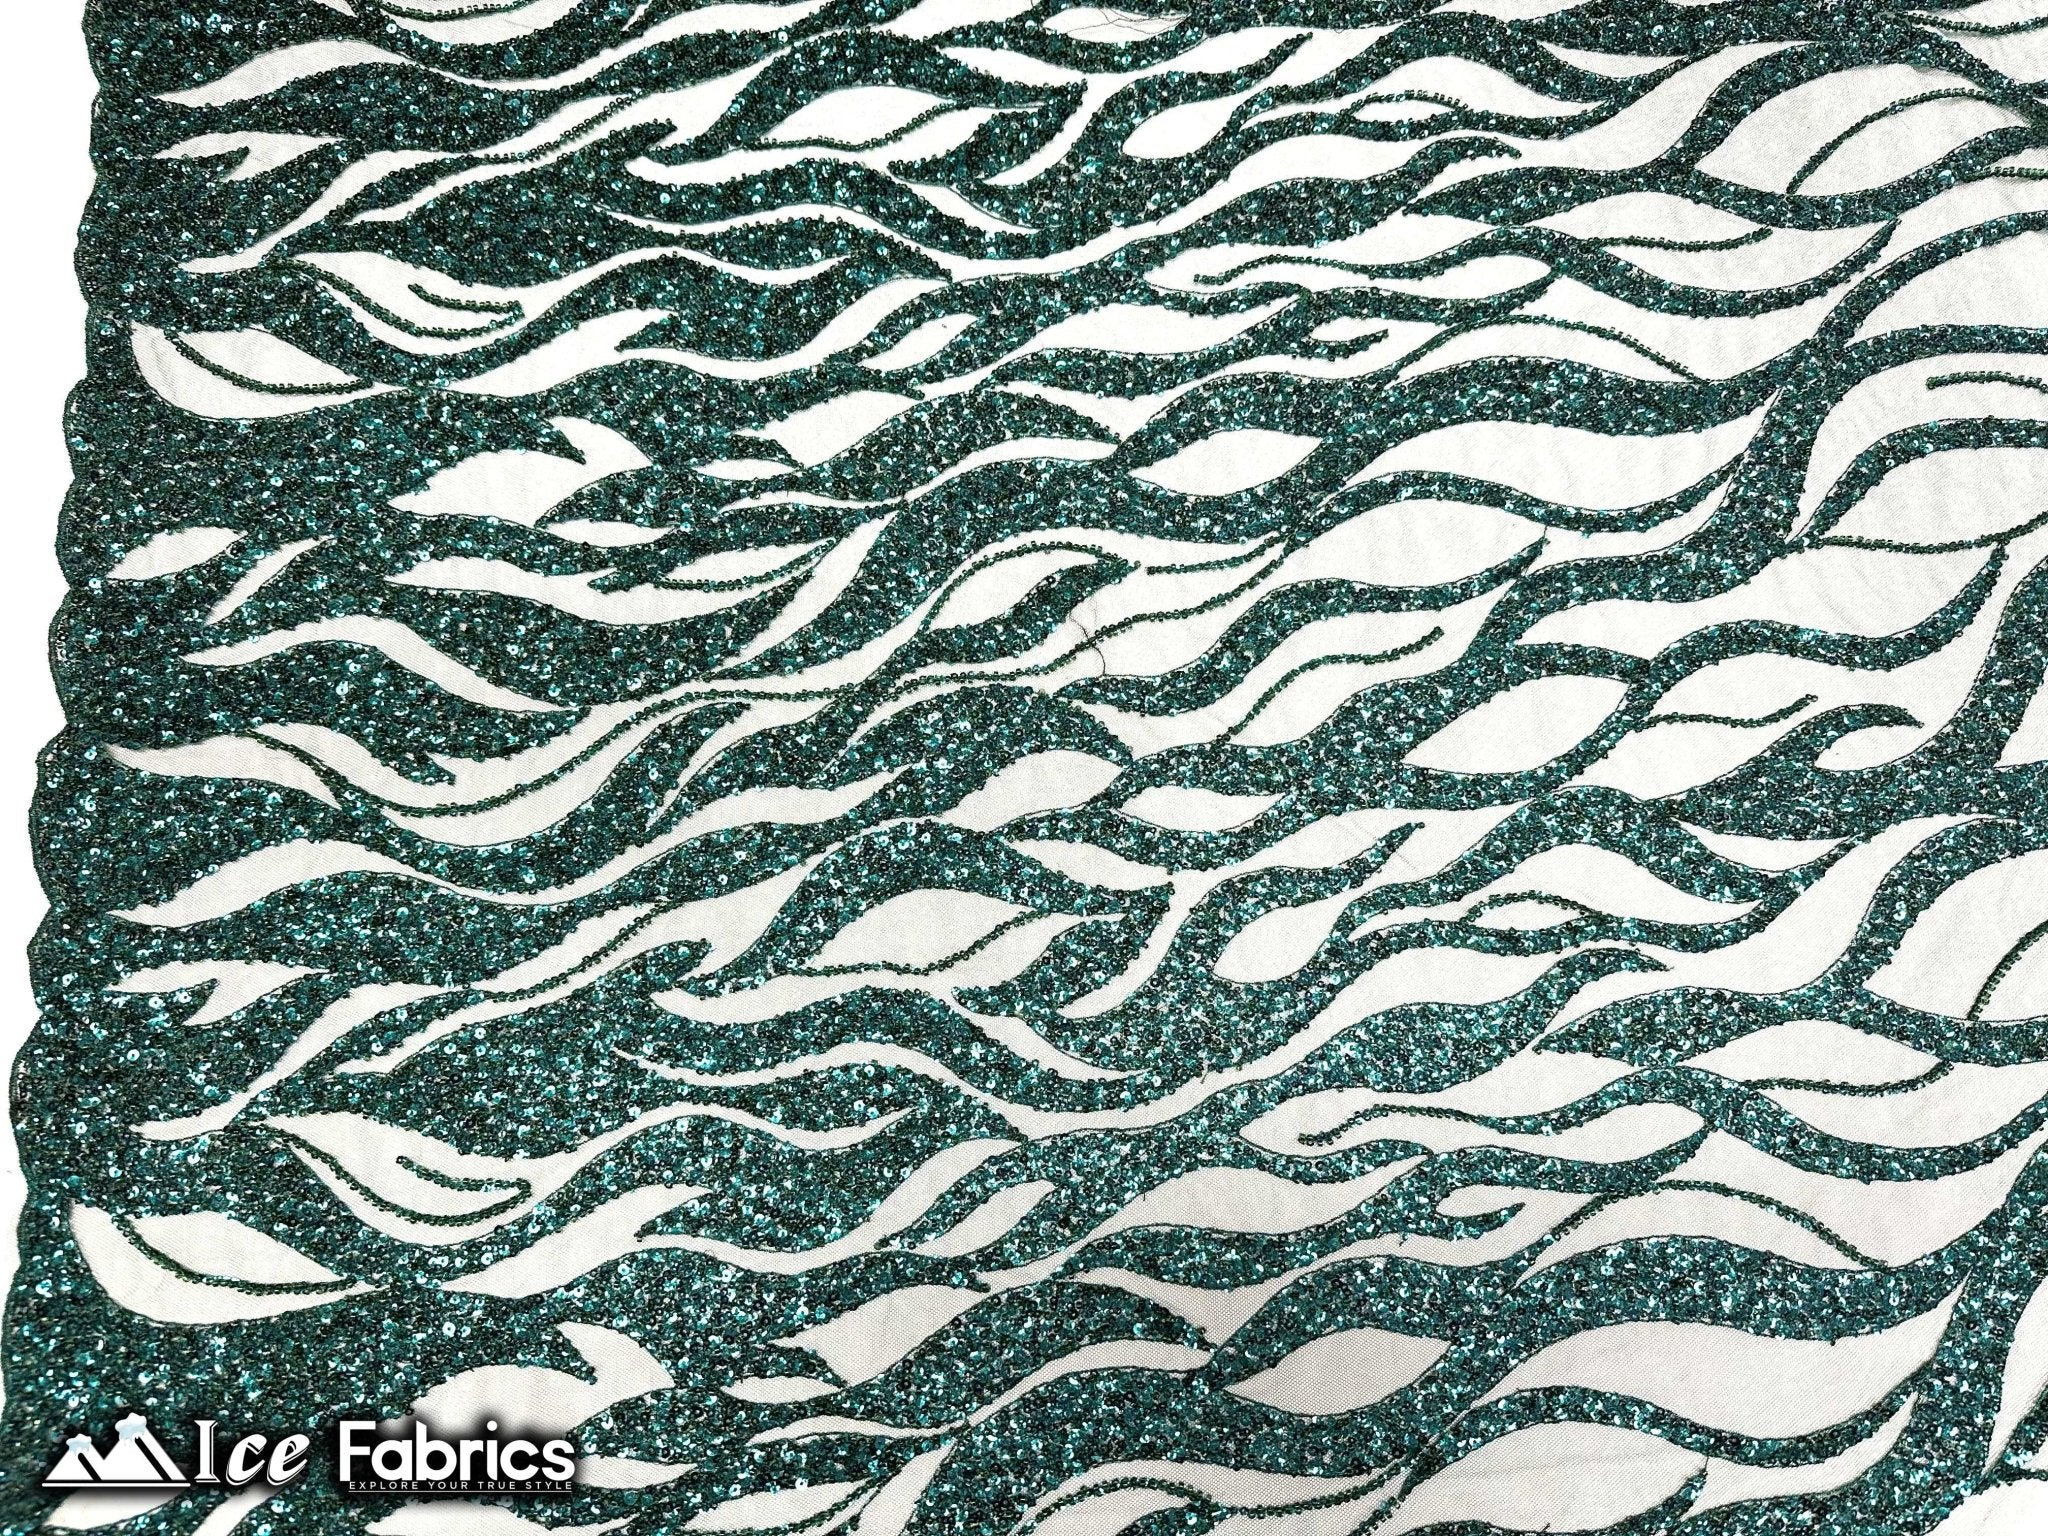 Elegant Heavy Beaded Fabric Lace Fabric with SequinICE FABRICSICE FABRICSHunter GreenBy The Yard (54" Wide)Elegant Heavy Beaded Fabric Lace Fabric with Sequin ICE FABRICS Hunter Green